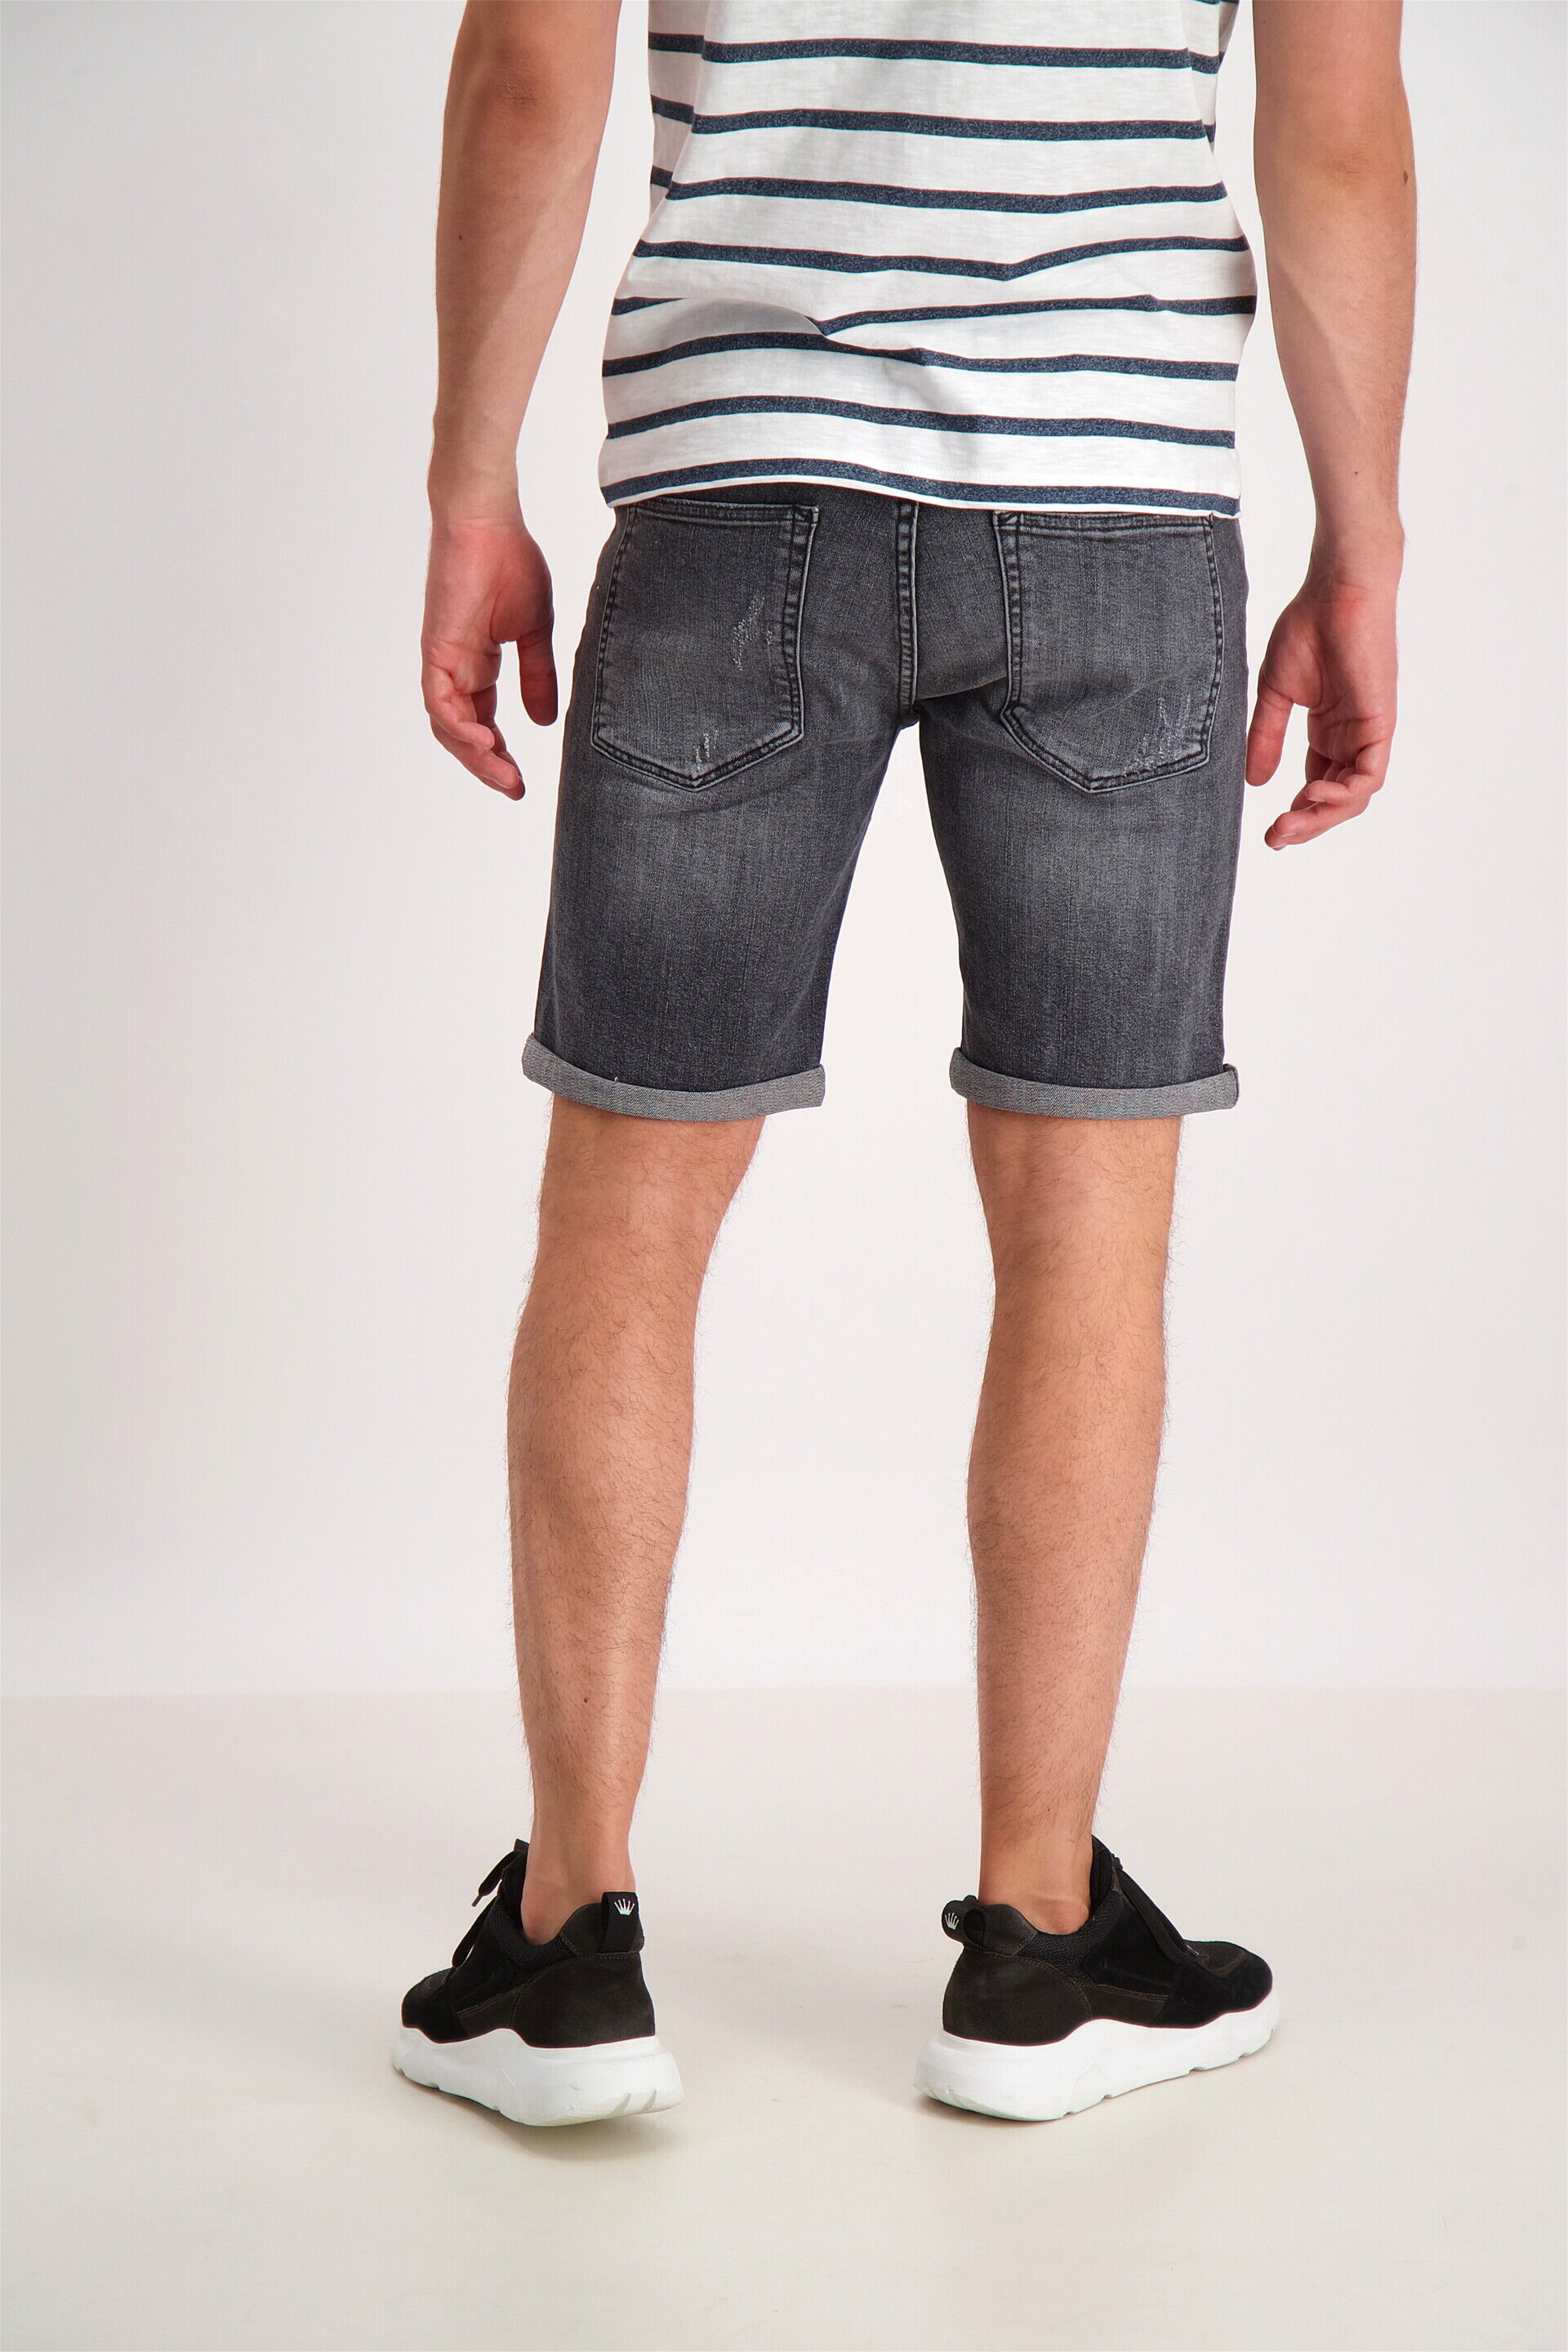 Jeans-Shorts 30-550002WLG